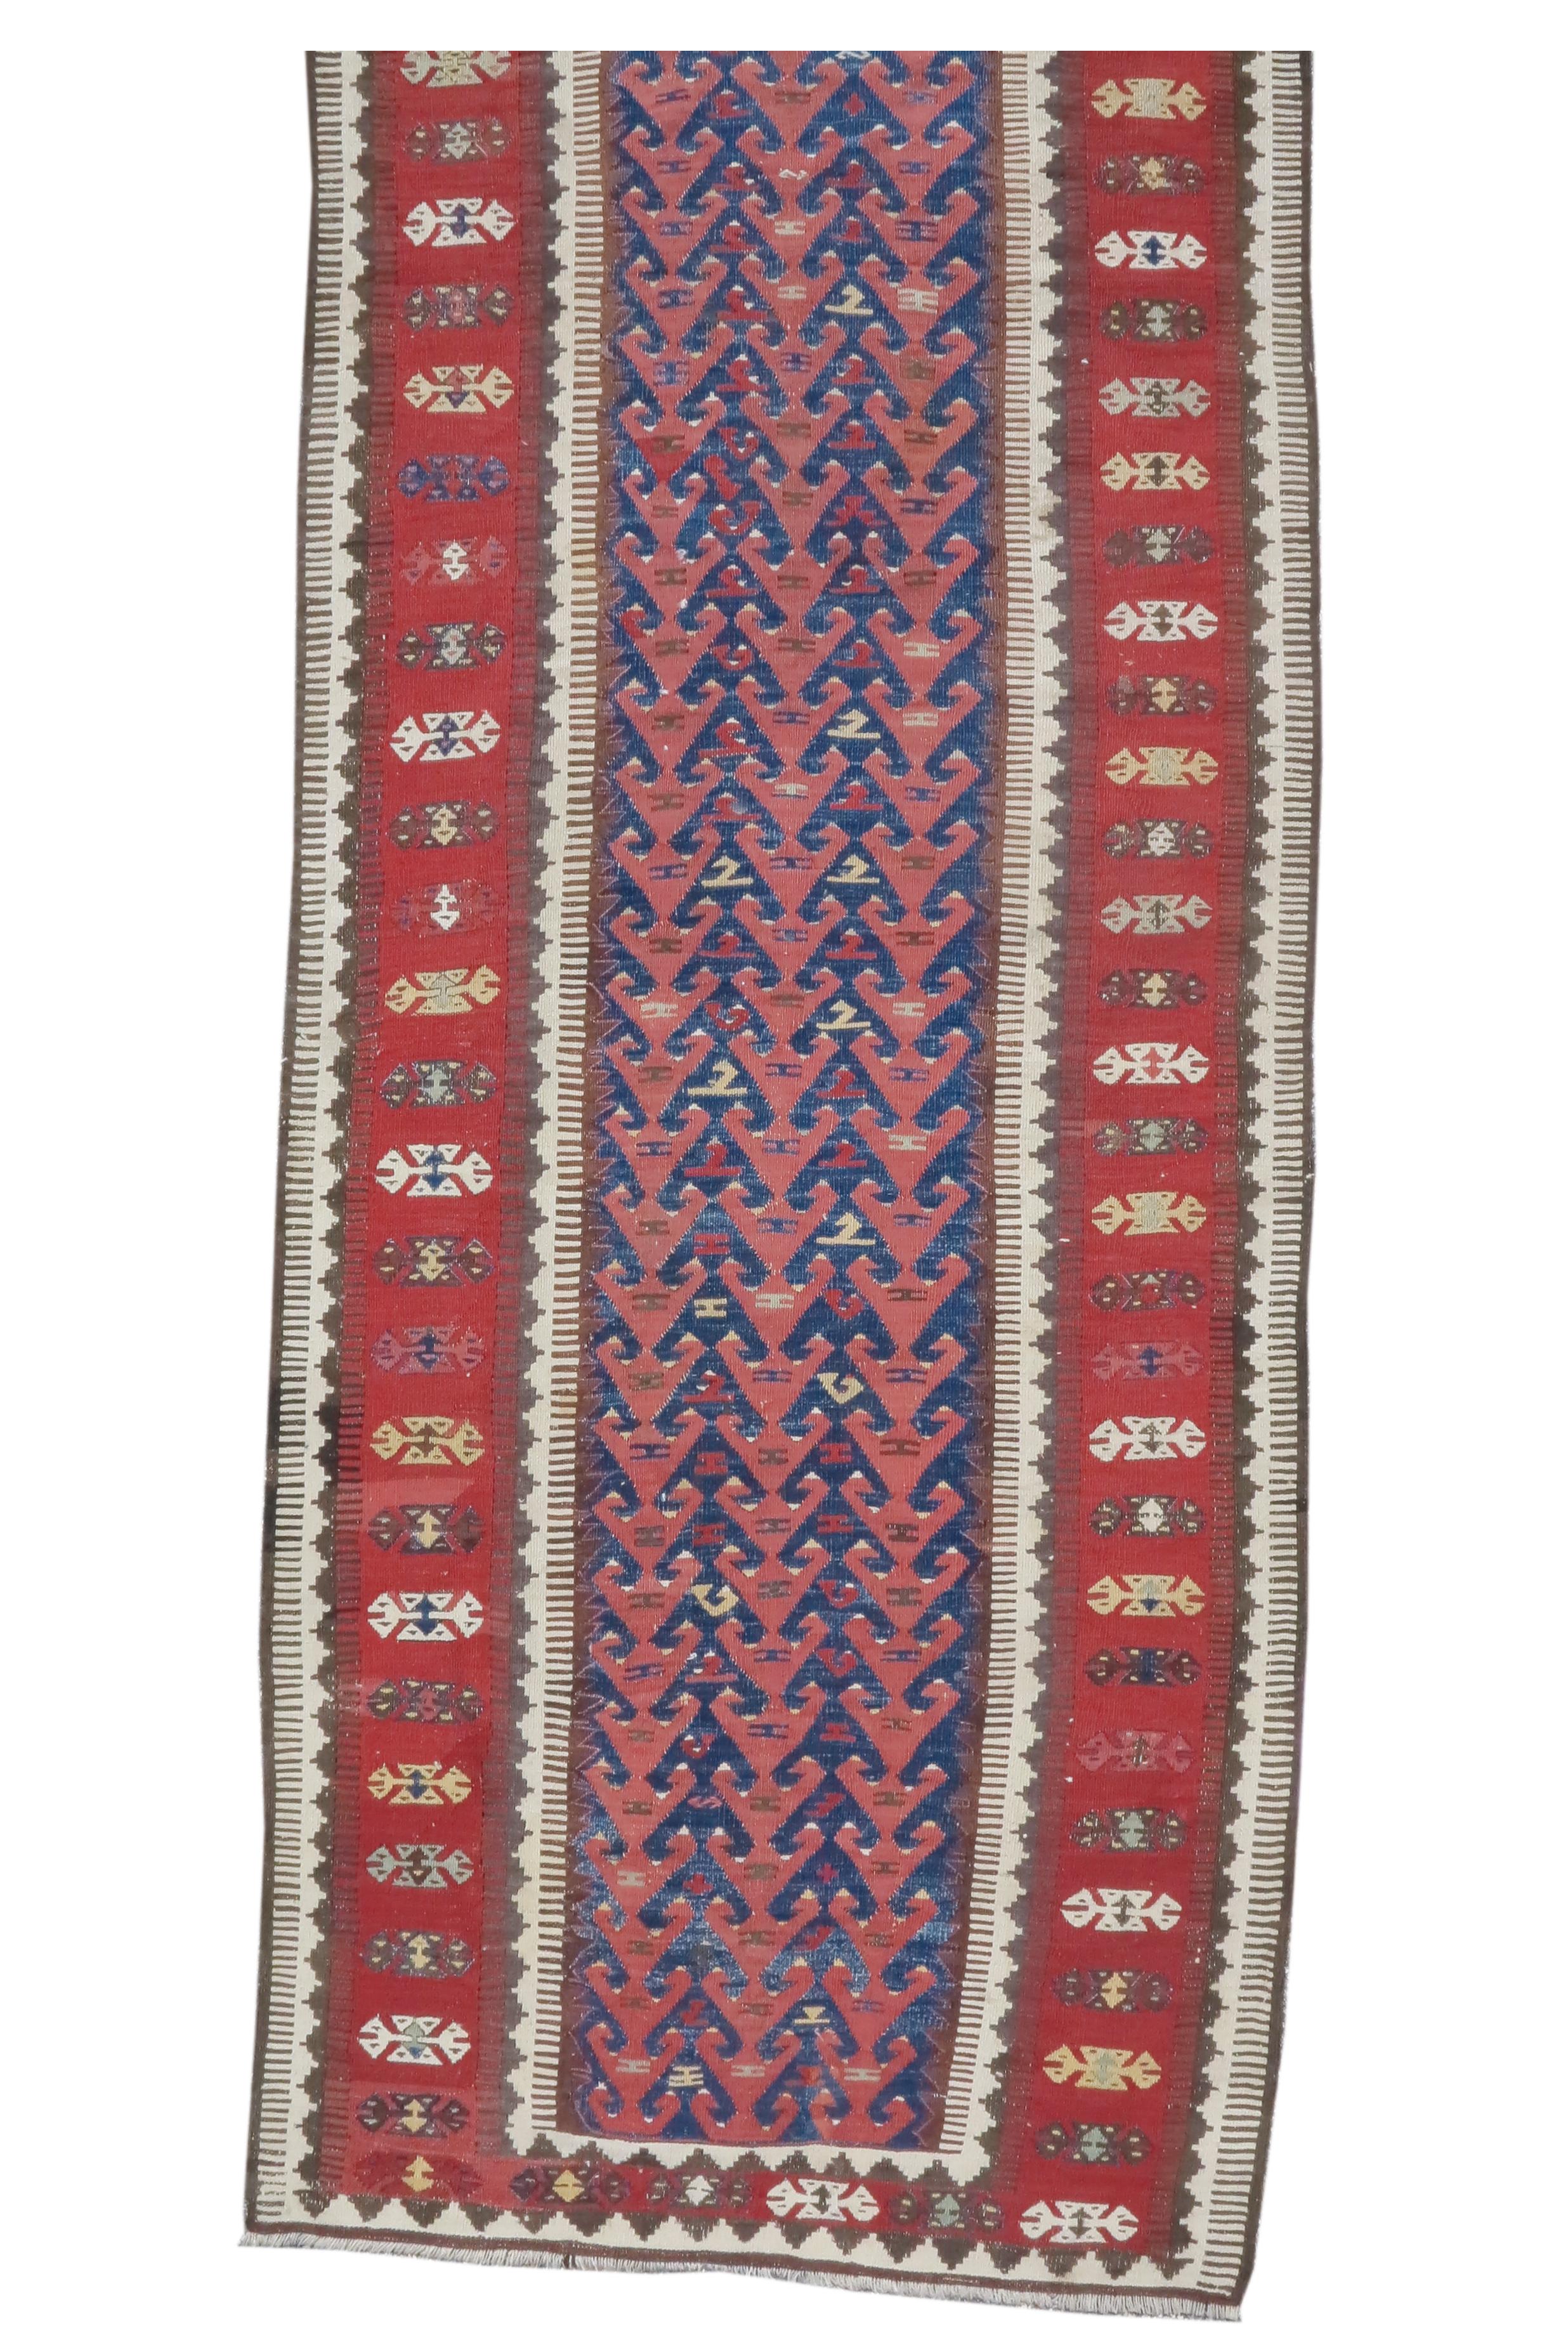 Wool Antique Anatolian Kilim Runner, 19th Century